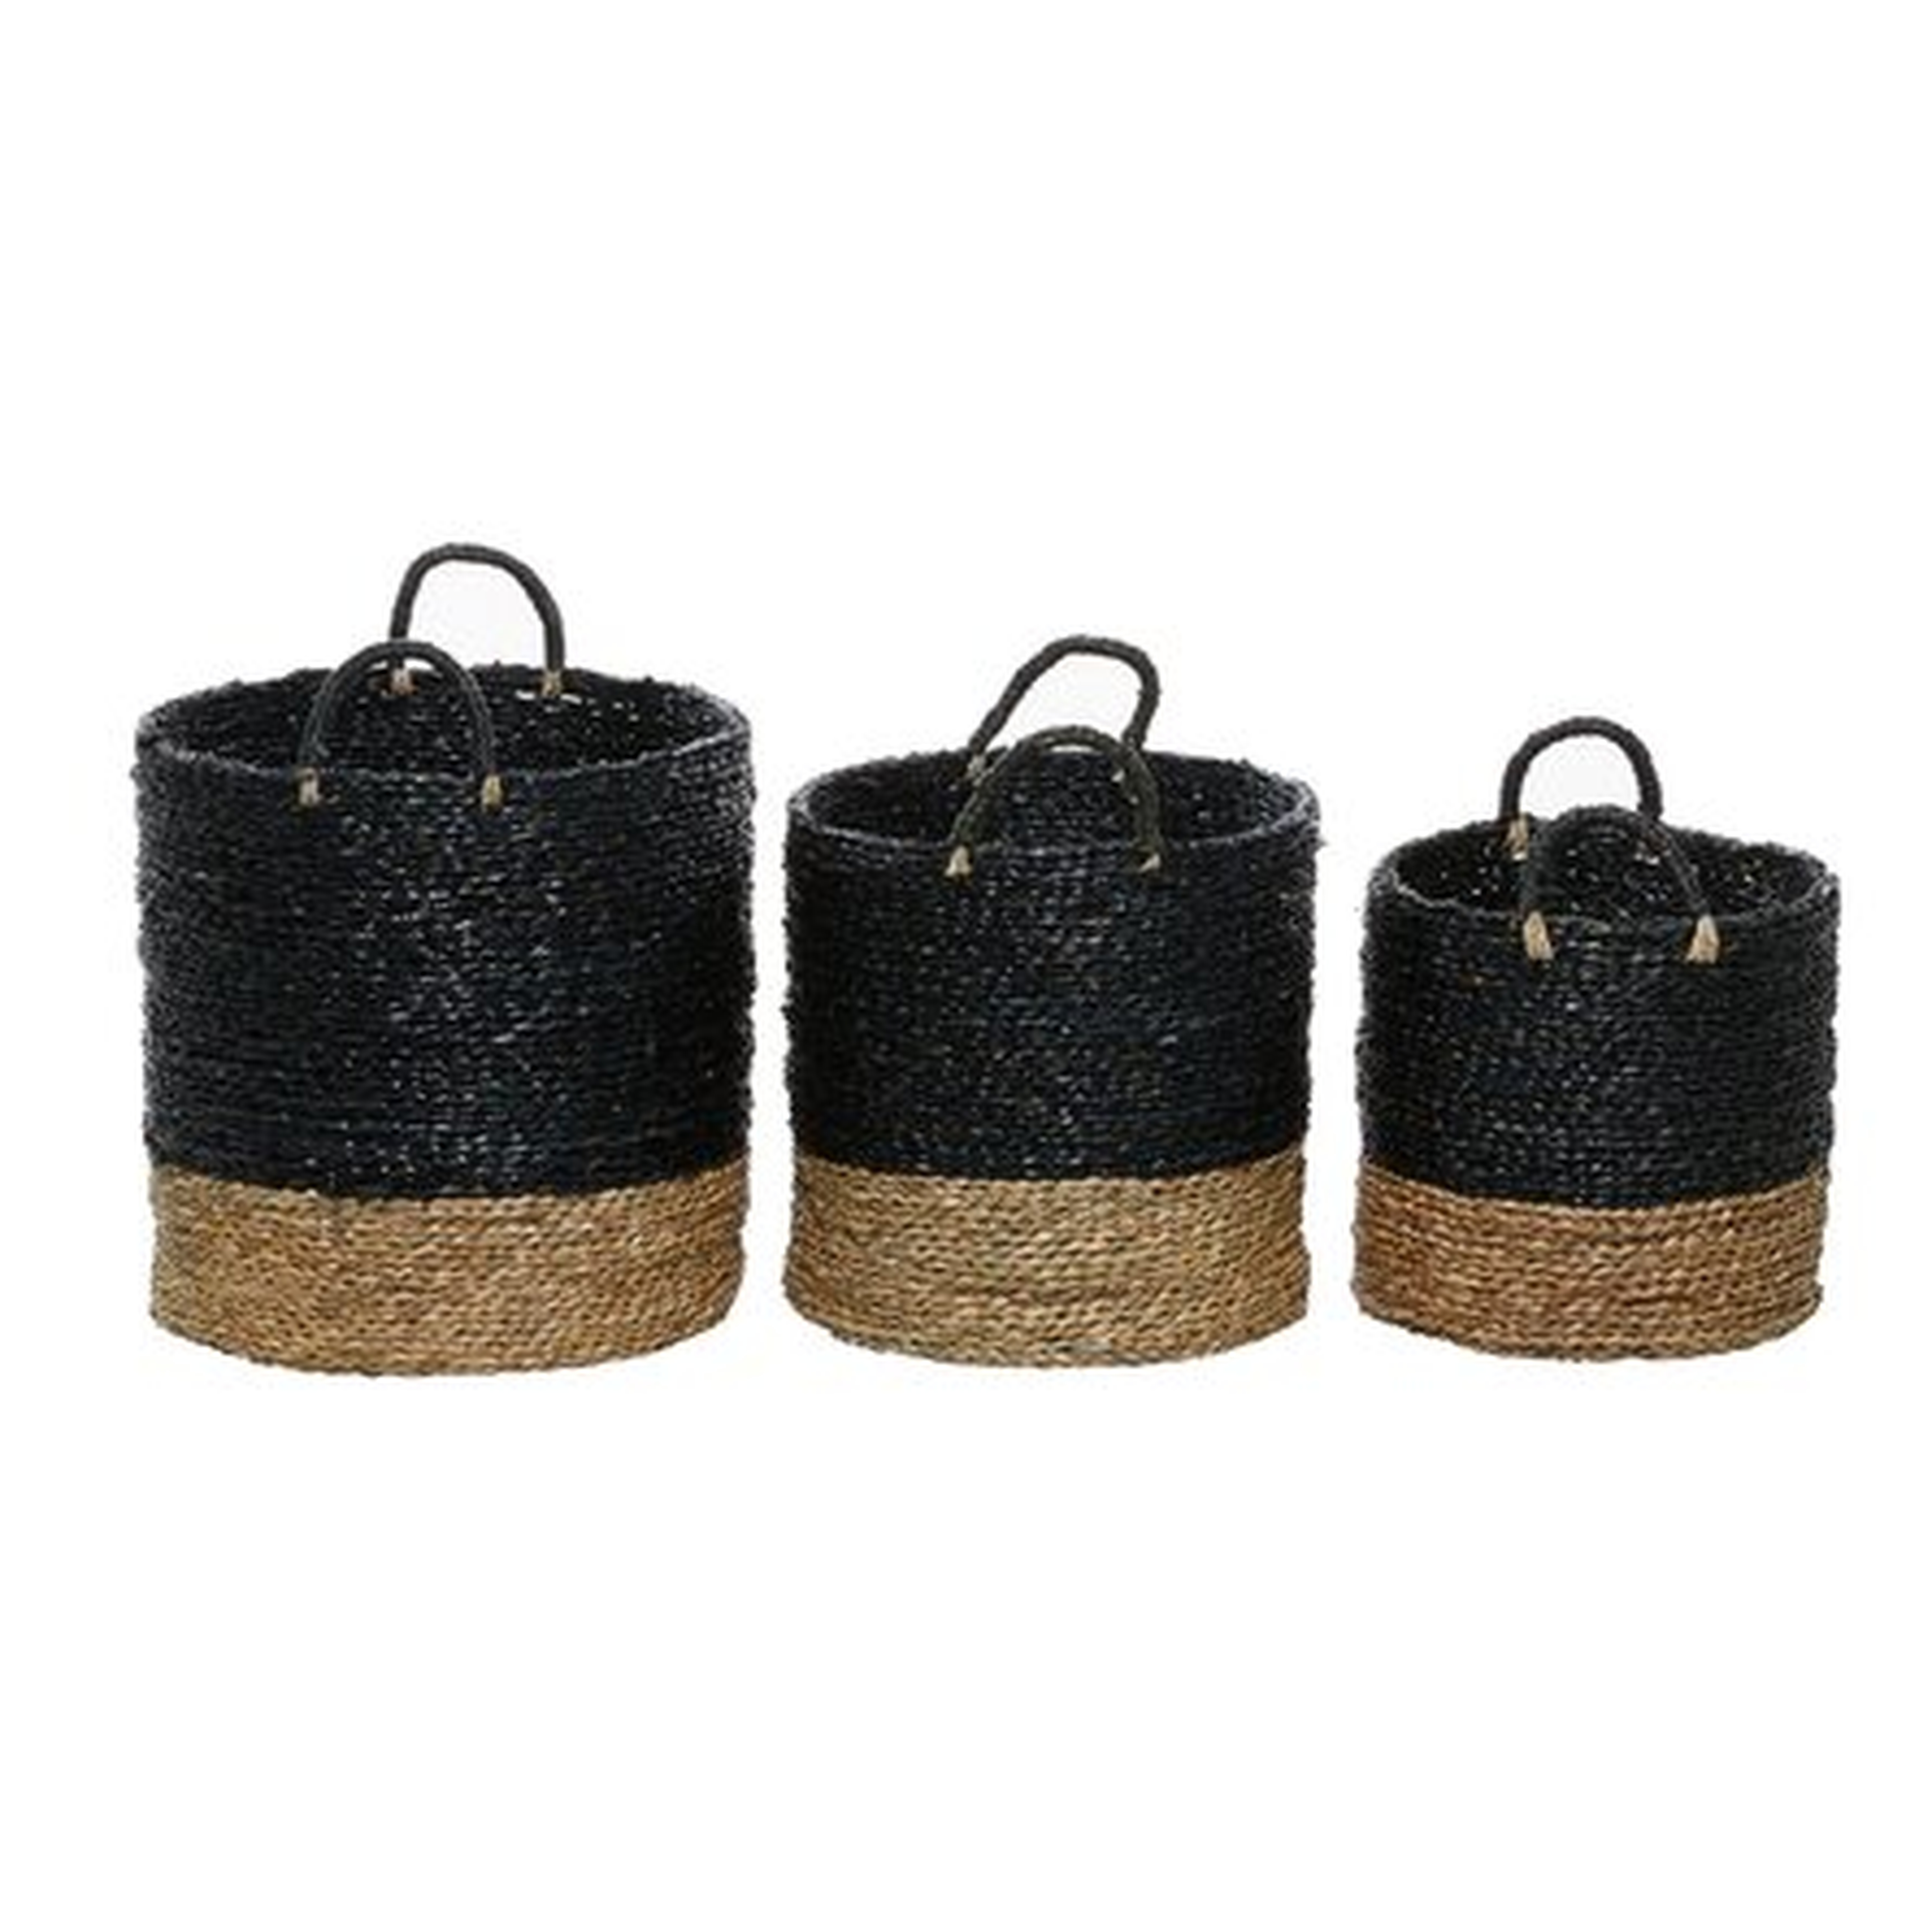 Woven Seagrass Basket Set, Set of 3 - Wayfair